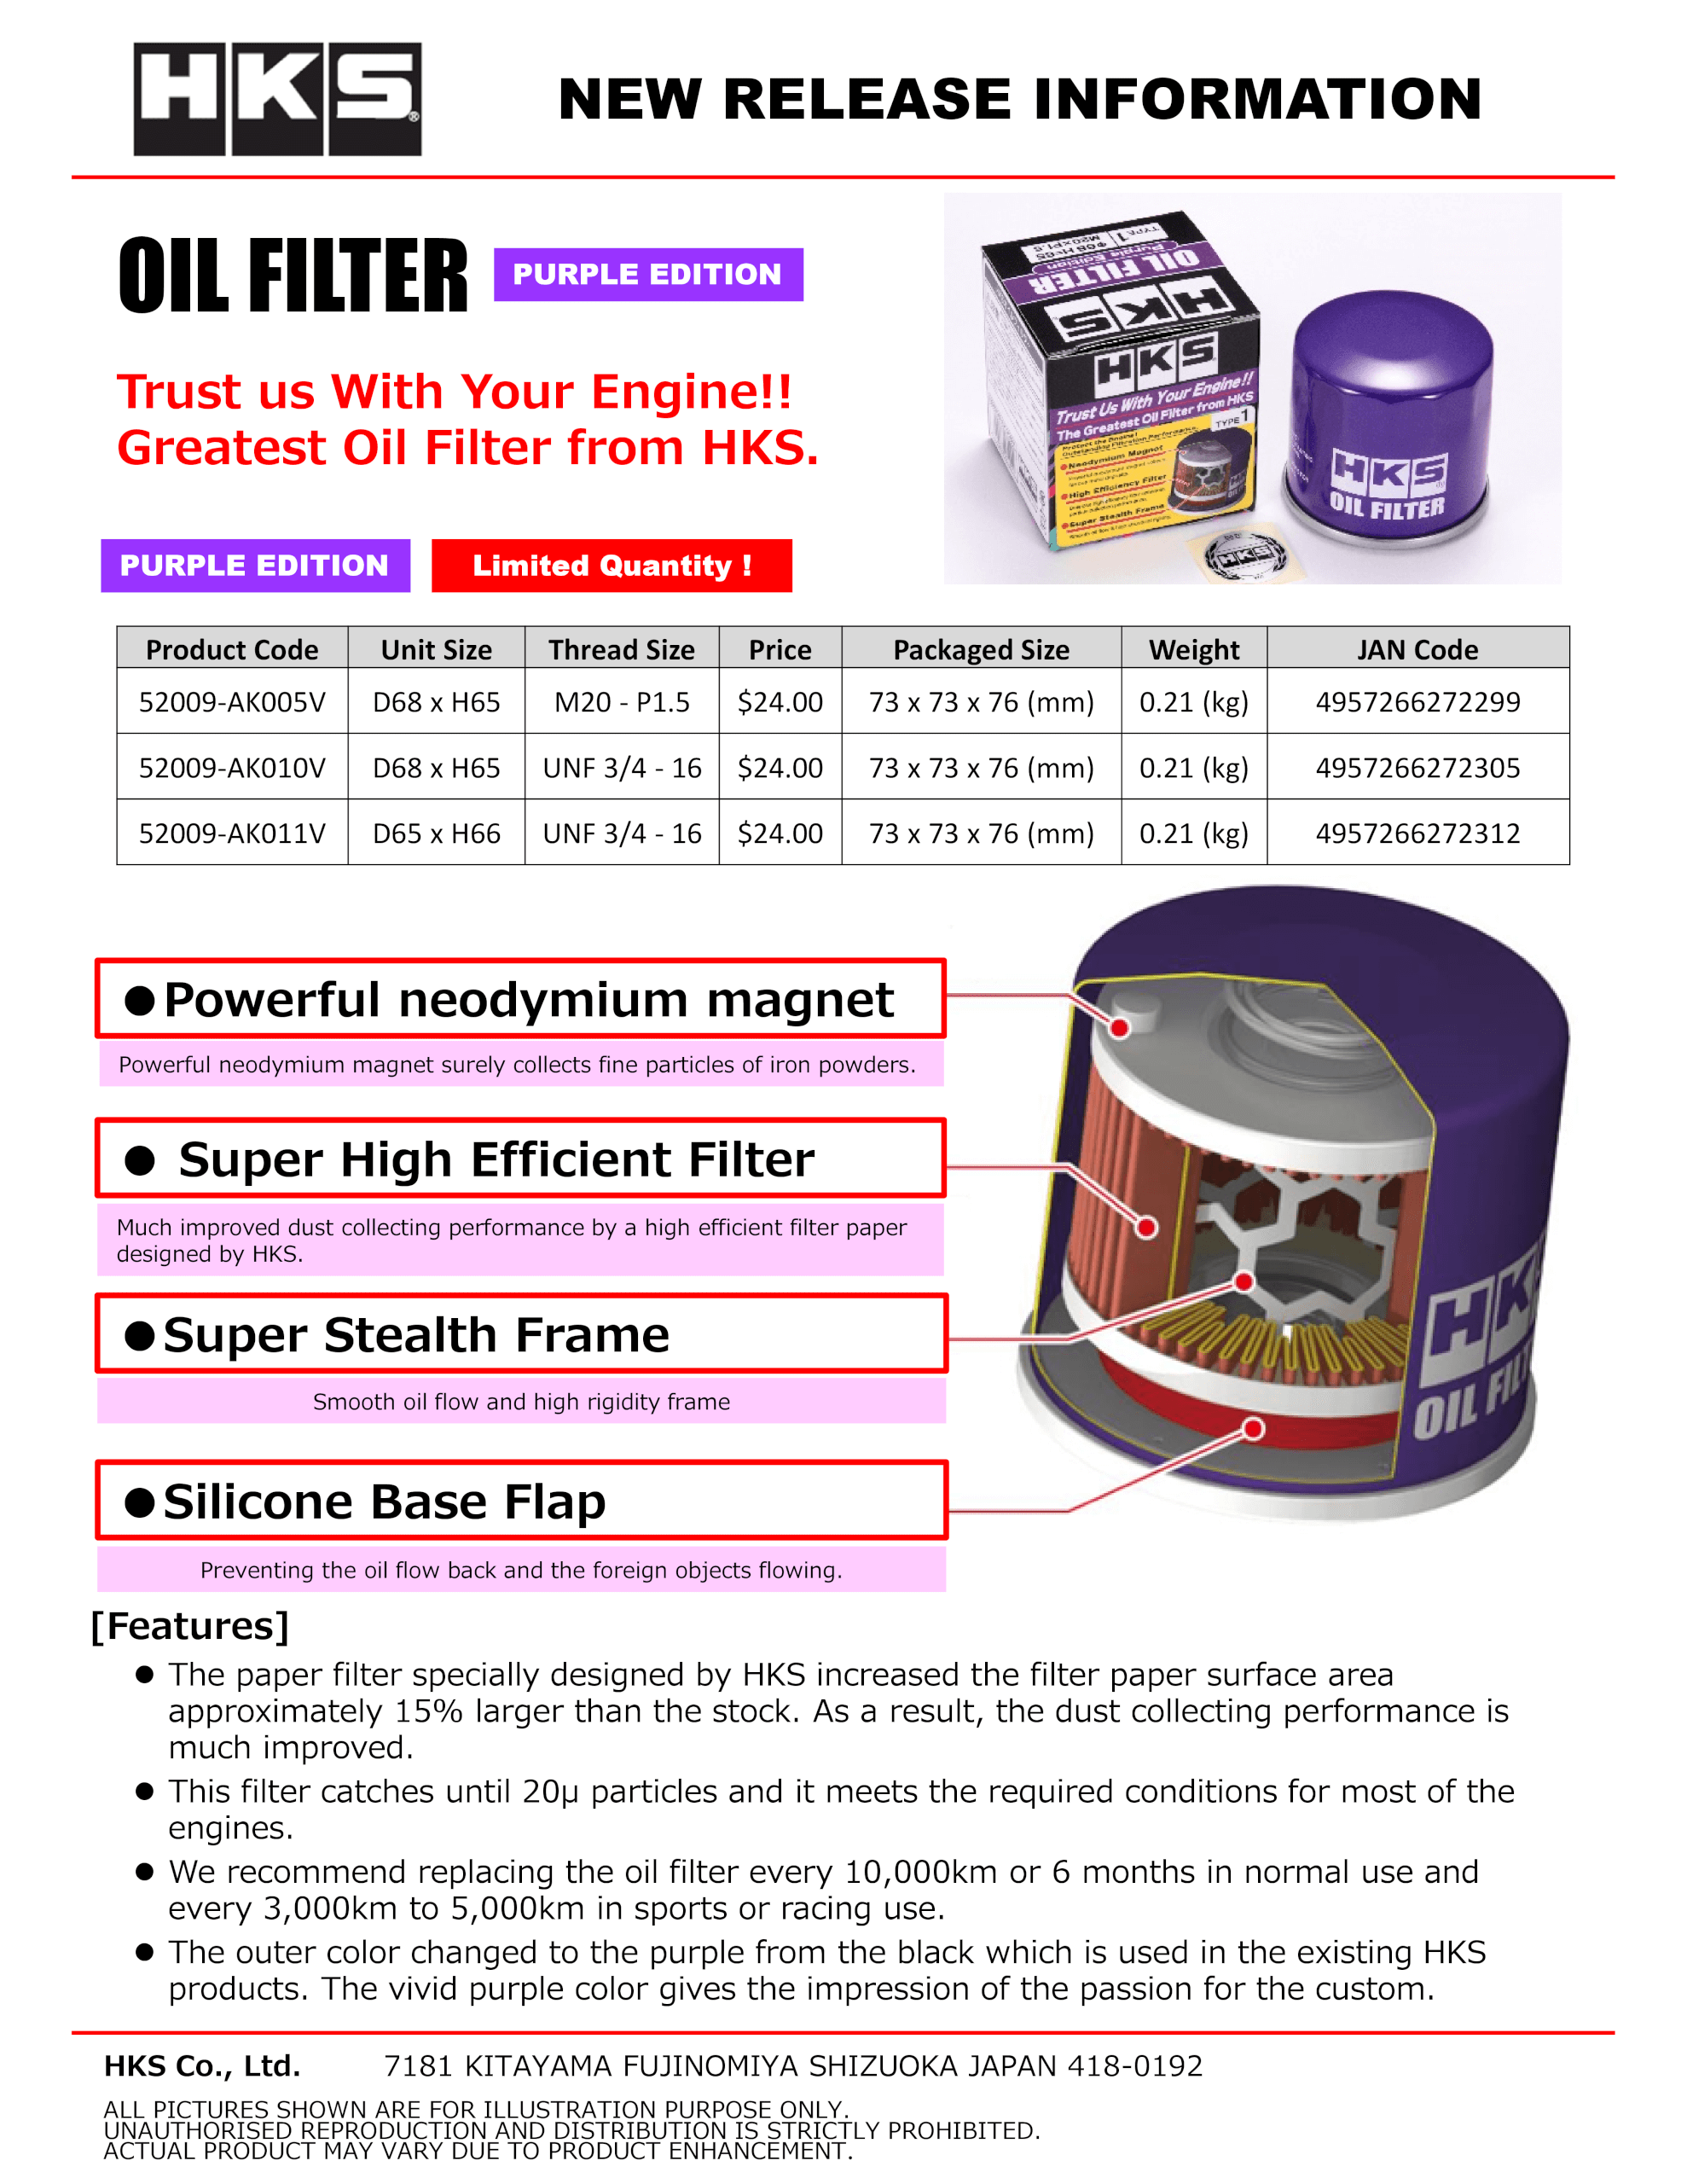 52009-AK005V_AK010V_AK011V_Oil filter purple edition revised.png